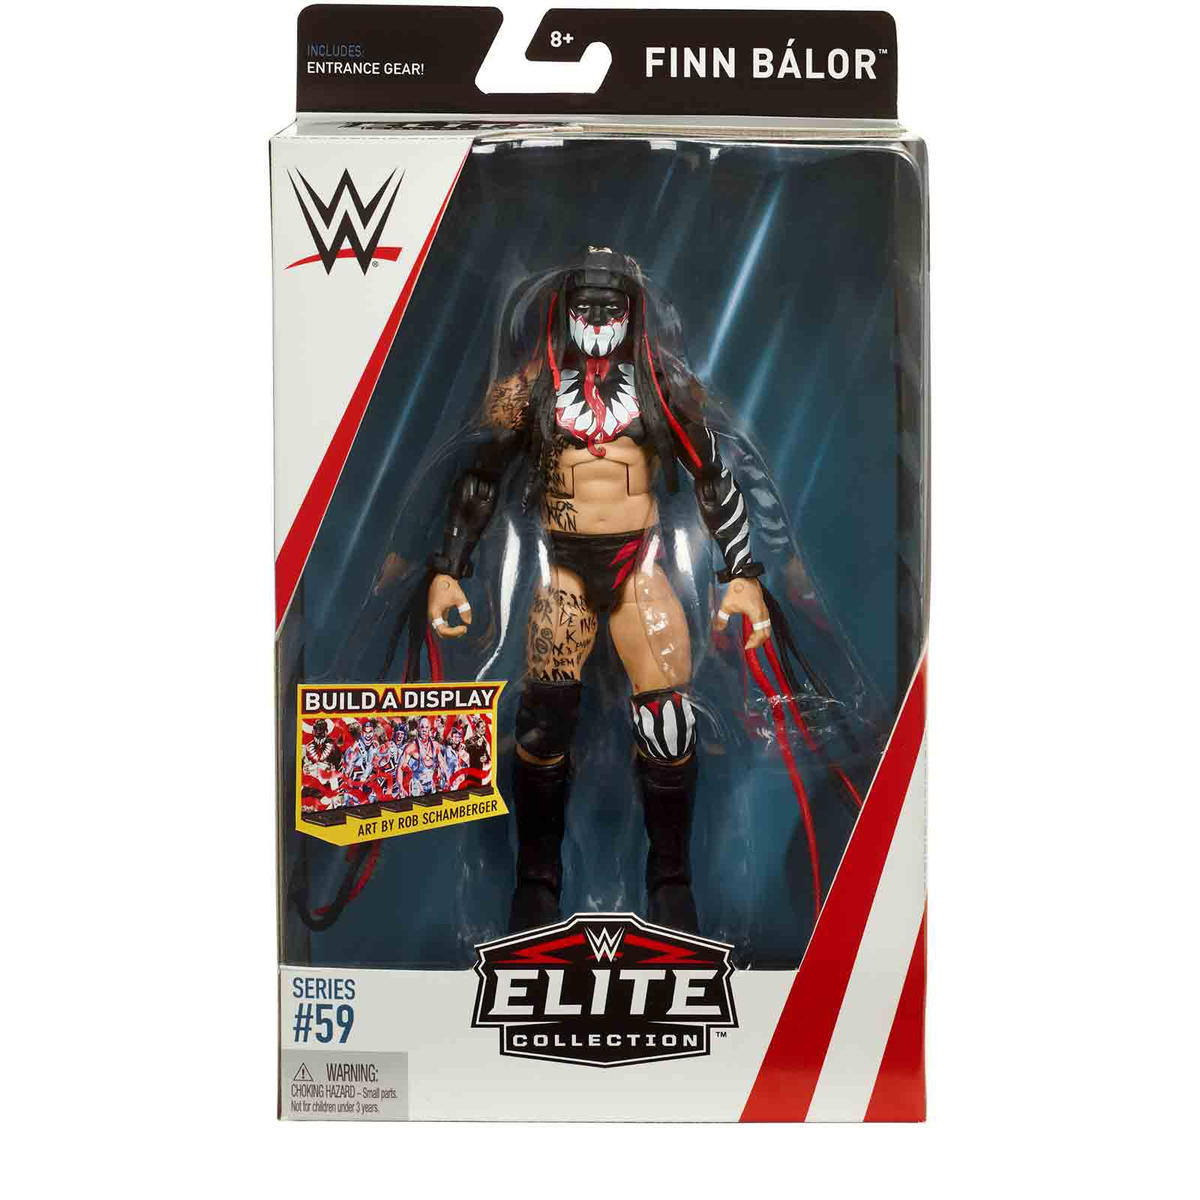 2018 WWE Mattel Elite Collection Series 59 Finn Balor